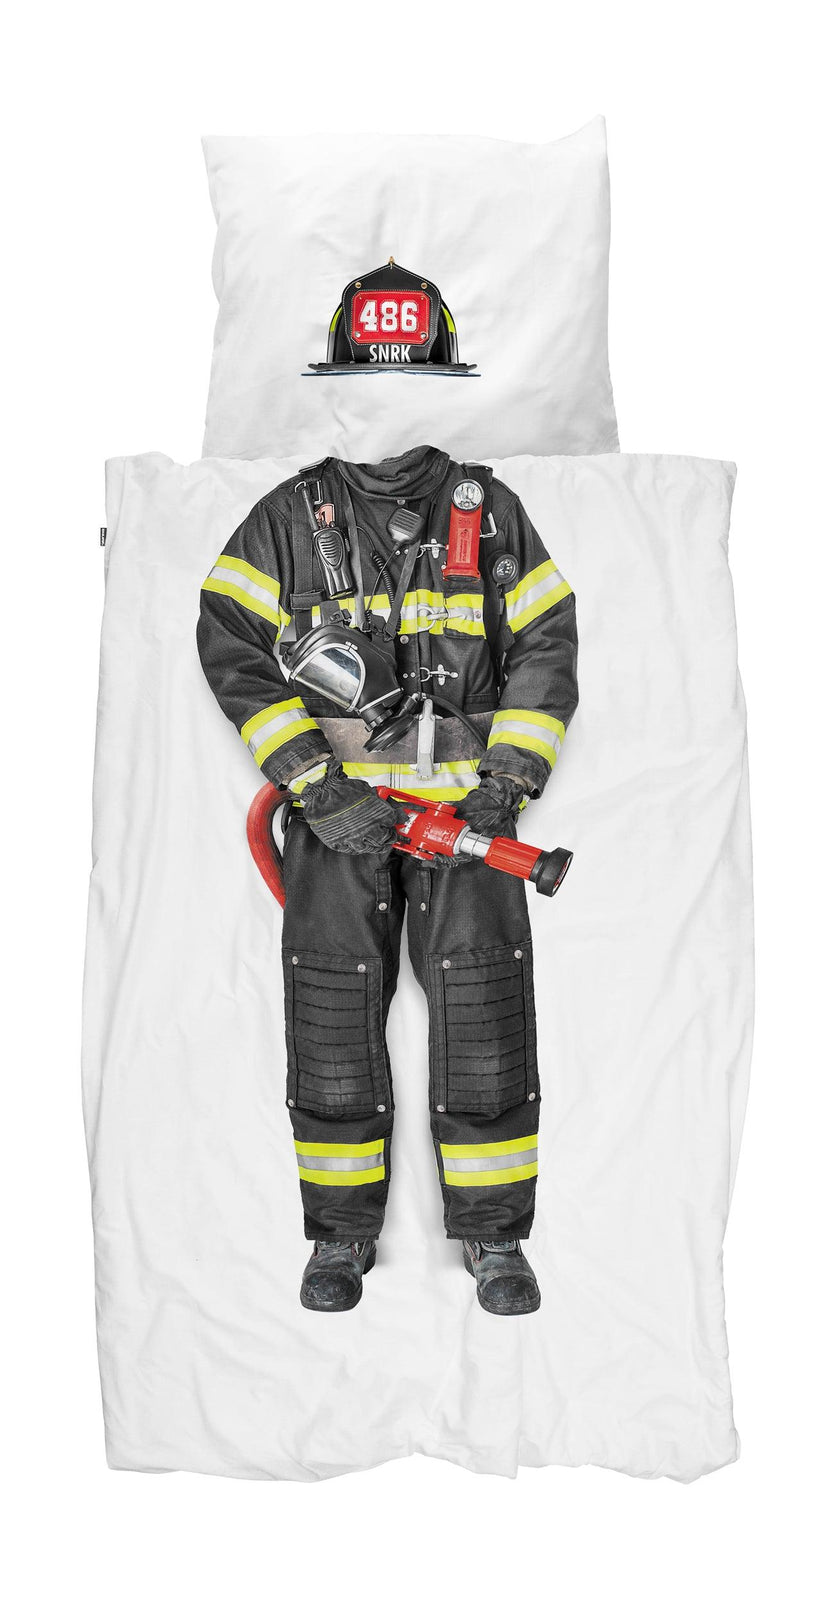 Firefighter pillowcase